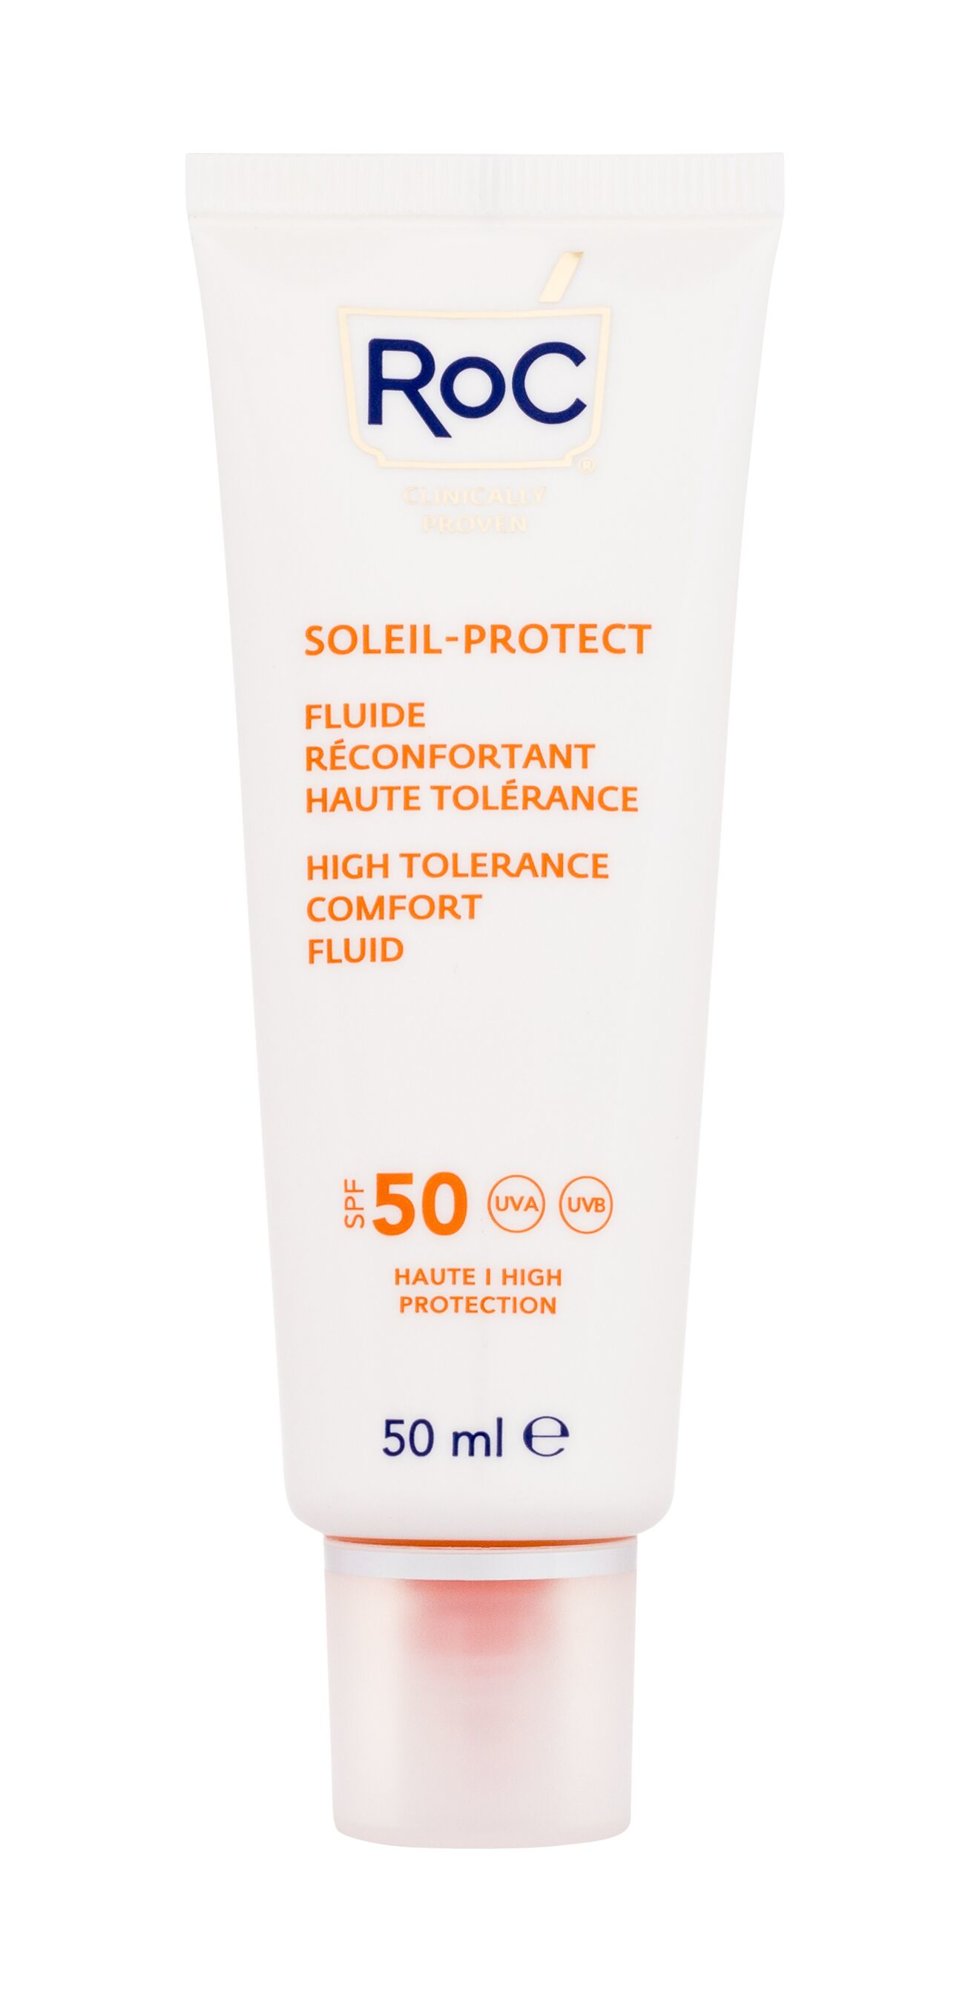 RoC Soleil-Protect High Tolerance Comfort Fluid veido apsauga